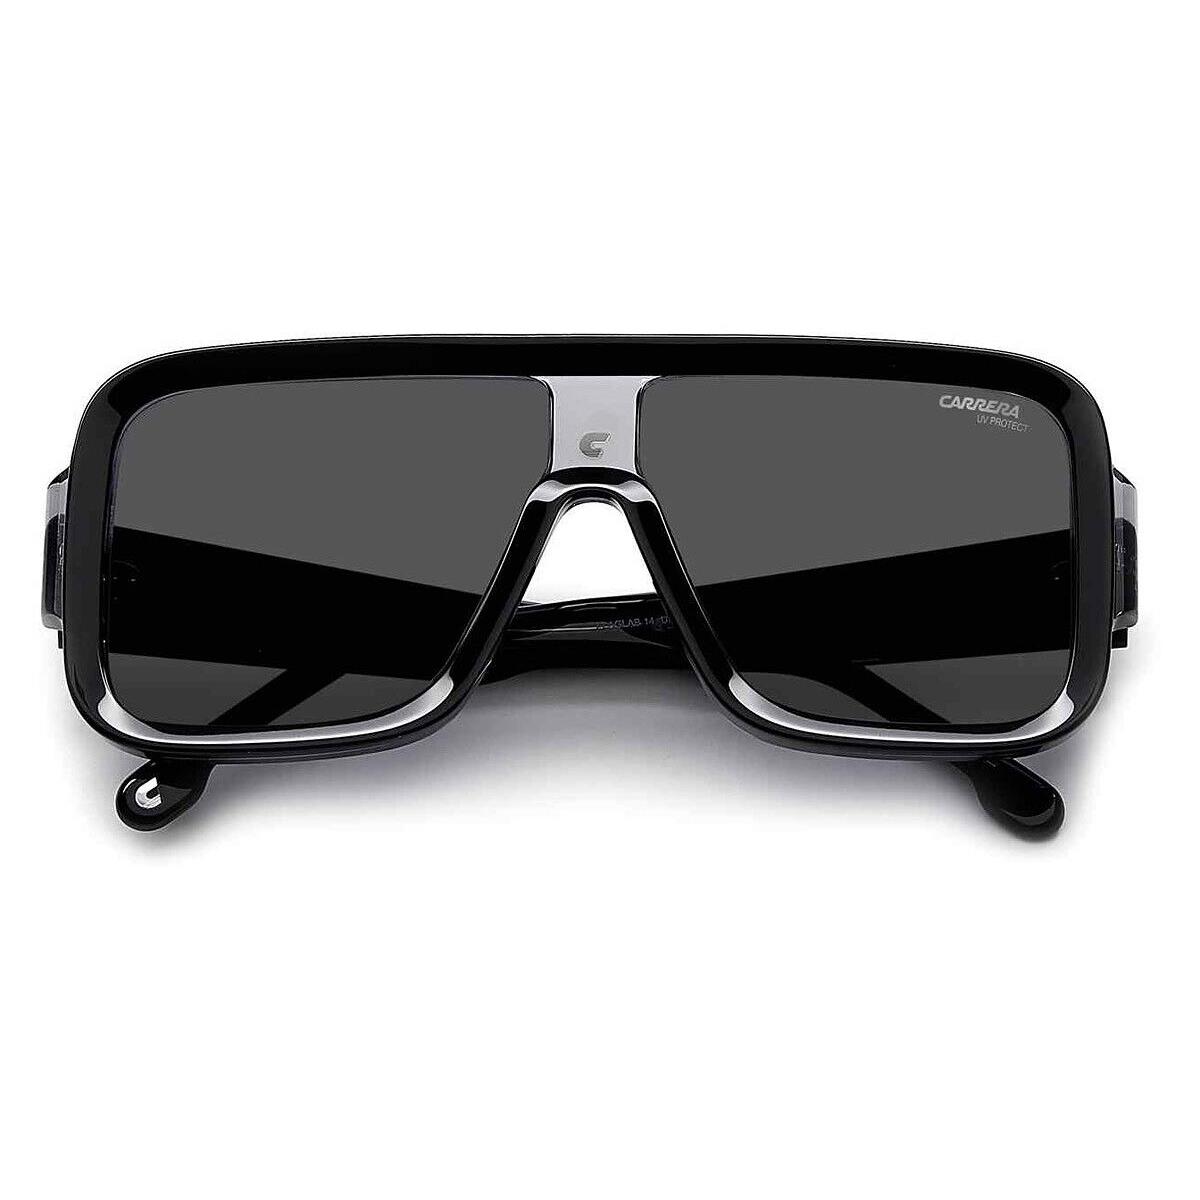 Carrera Flaglab 14 Sunglasses Dark Gray Black Gray AR 62mm - Frame: Dark Gray Black / Gray AR, Lens: Gray AR